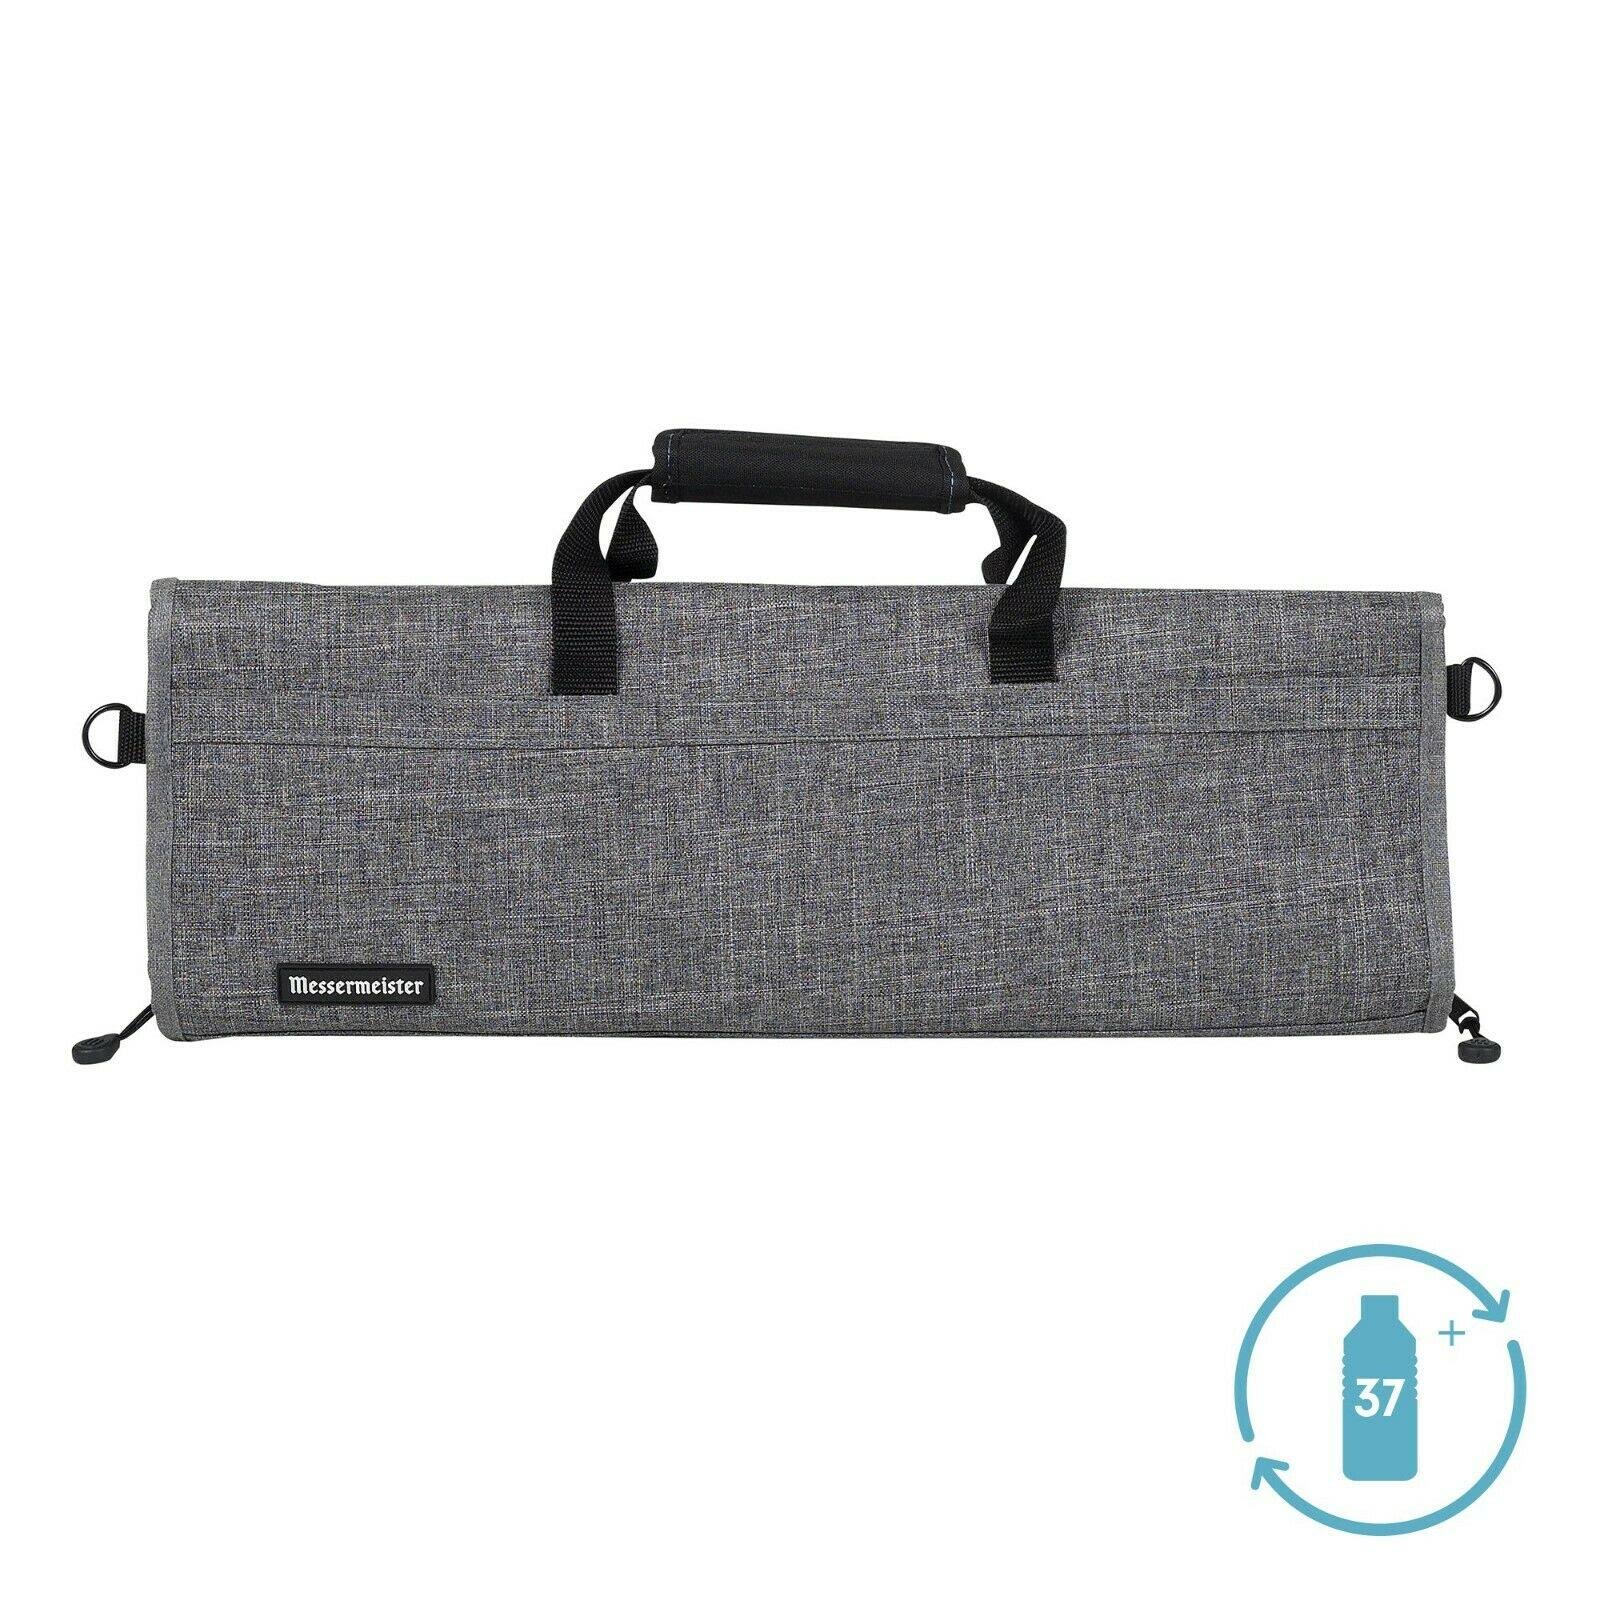 Messermeister 12 Pocket Repurposed Knife Storage Roll / Bag / Luggage - Gray